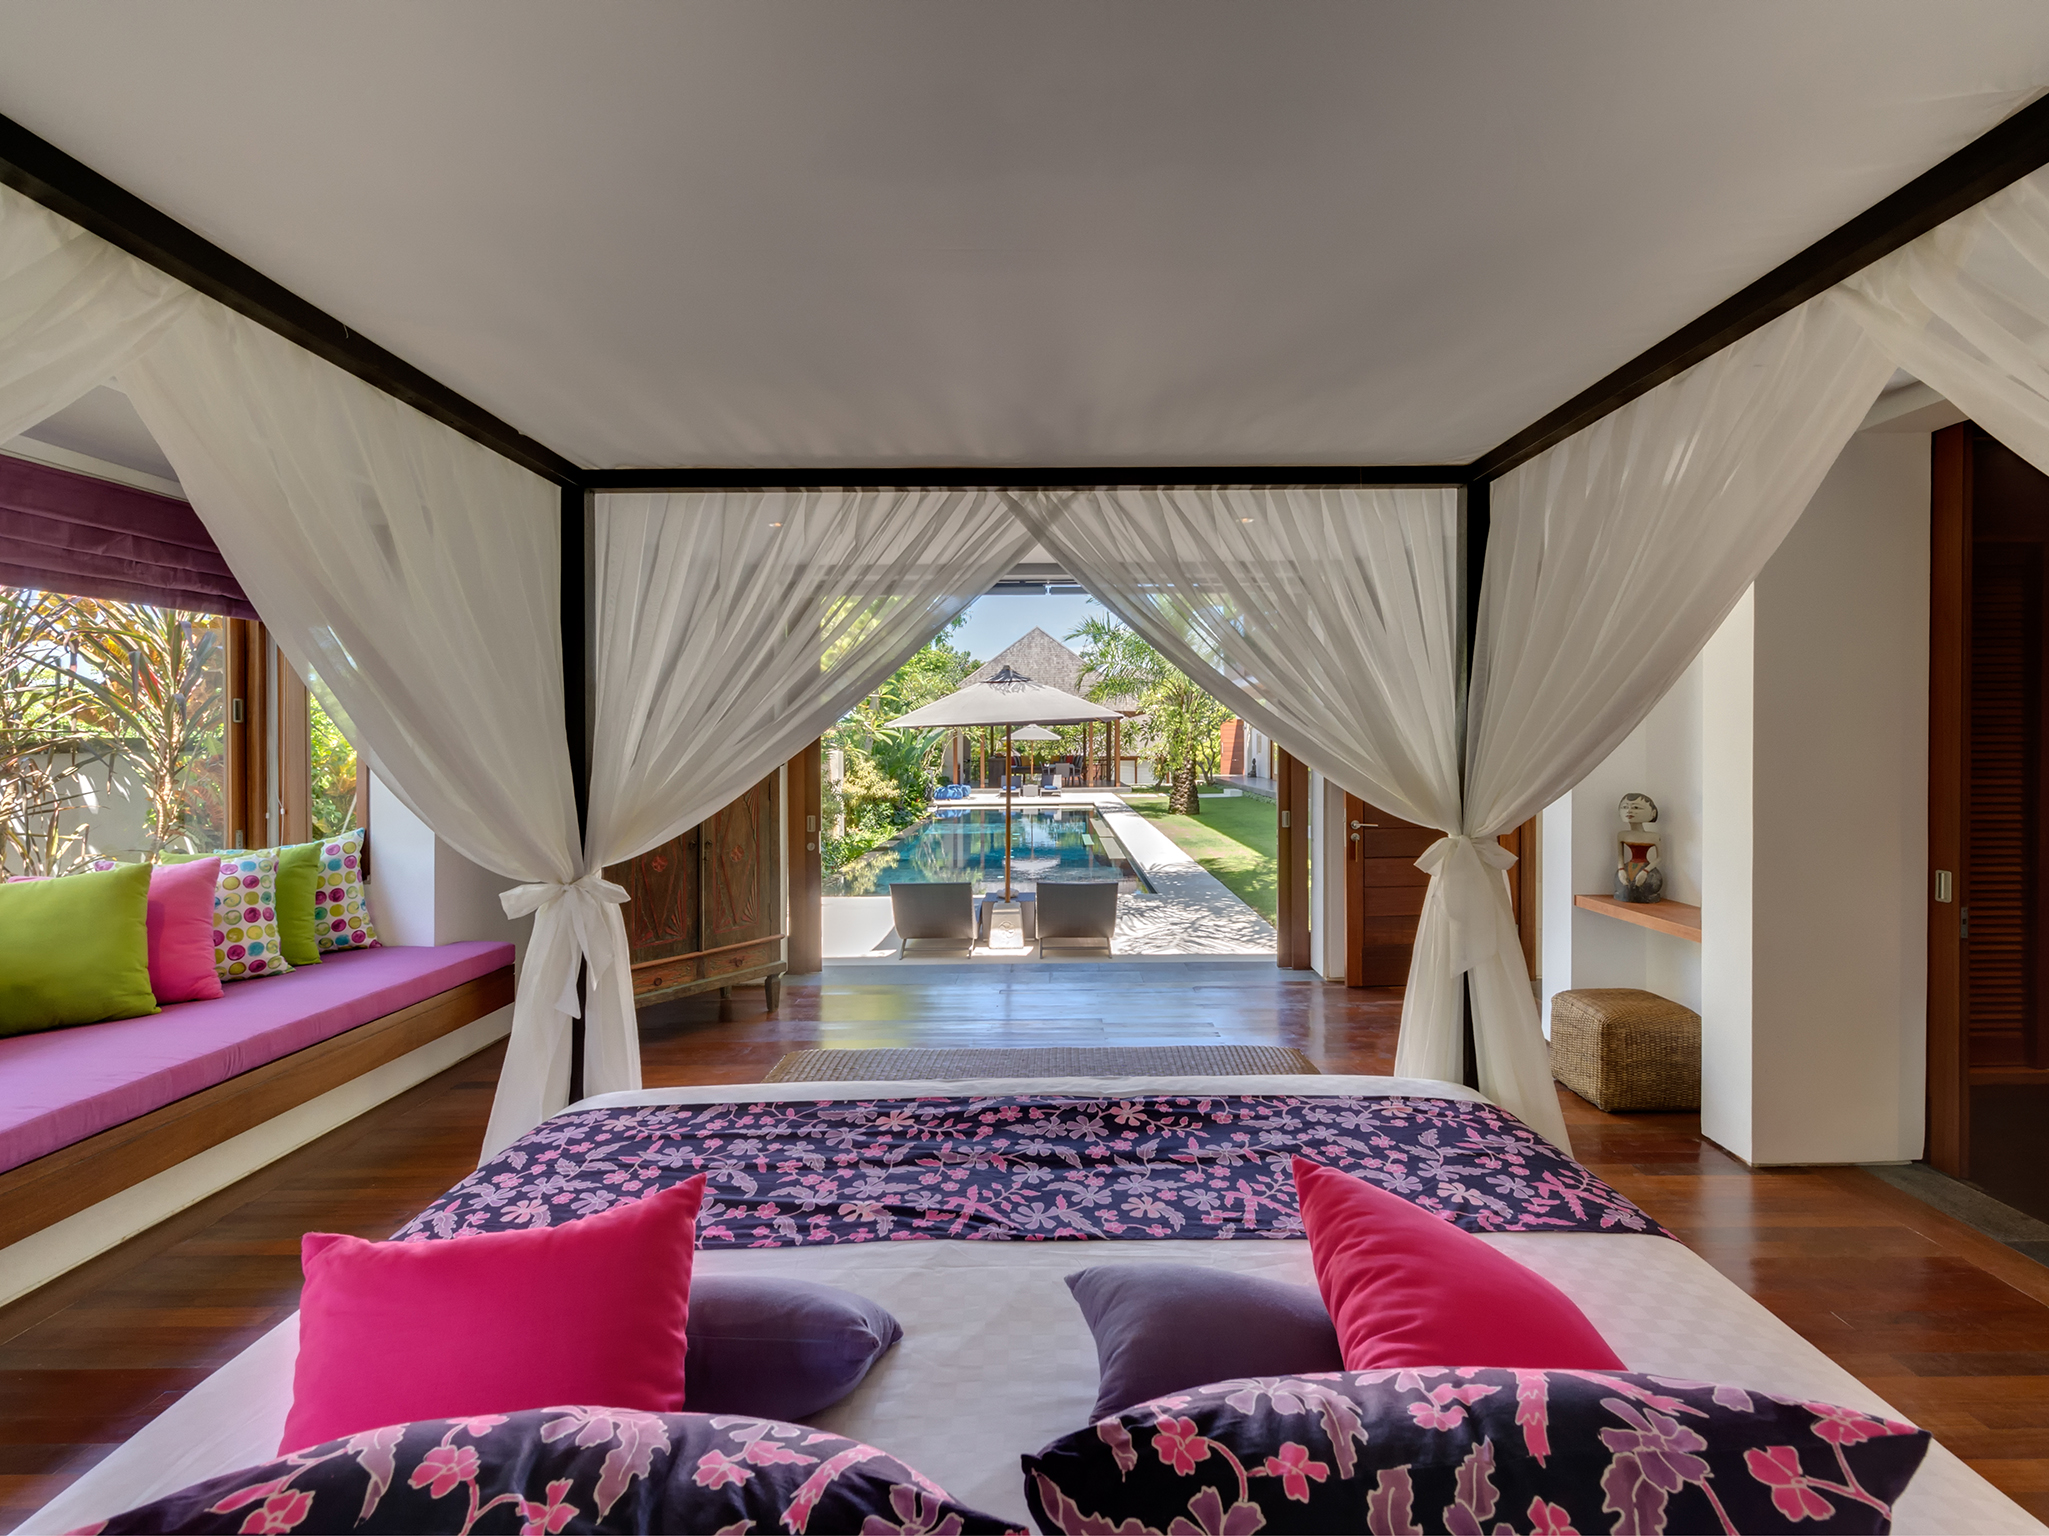 Bendega Rato - Master bedroom with pool view - Bendega Rato, Canggu, Bali